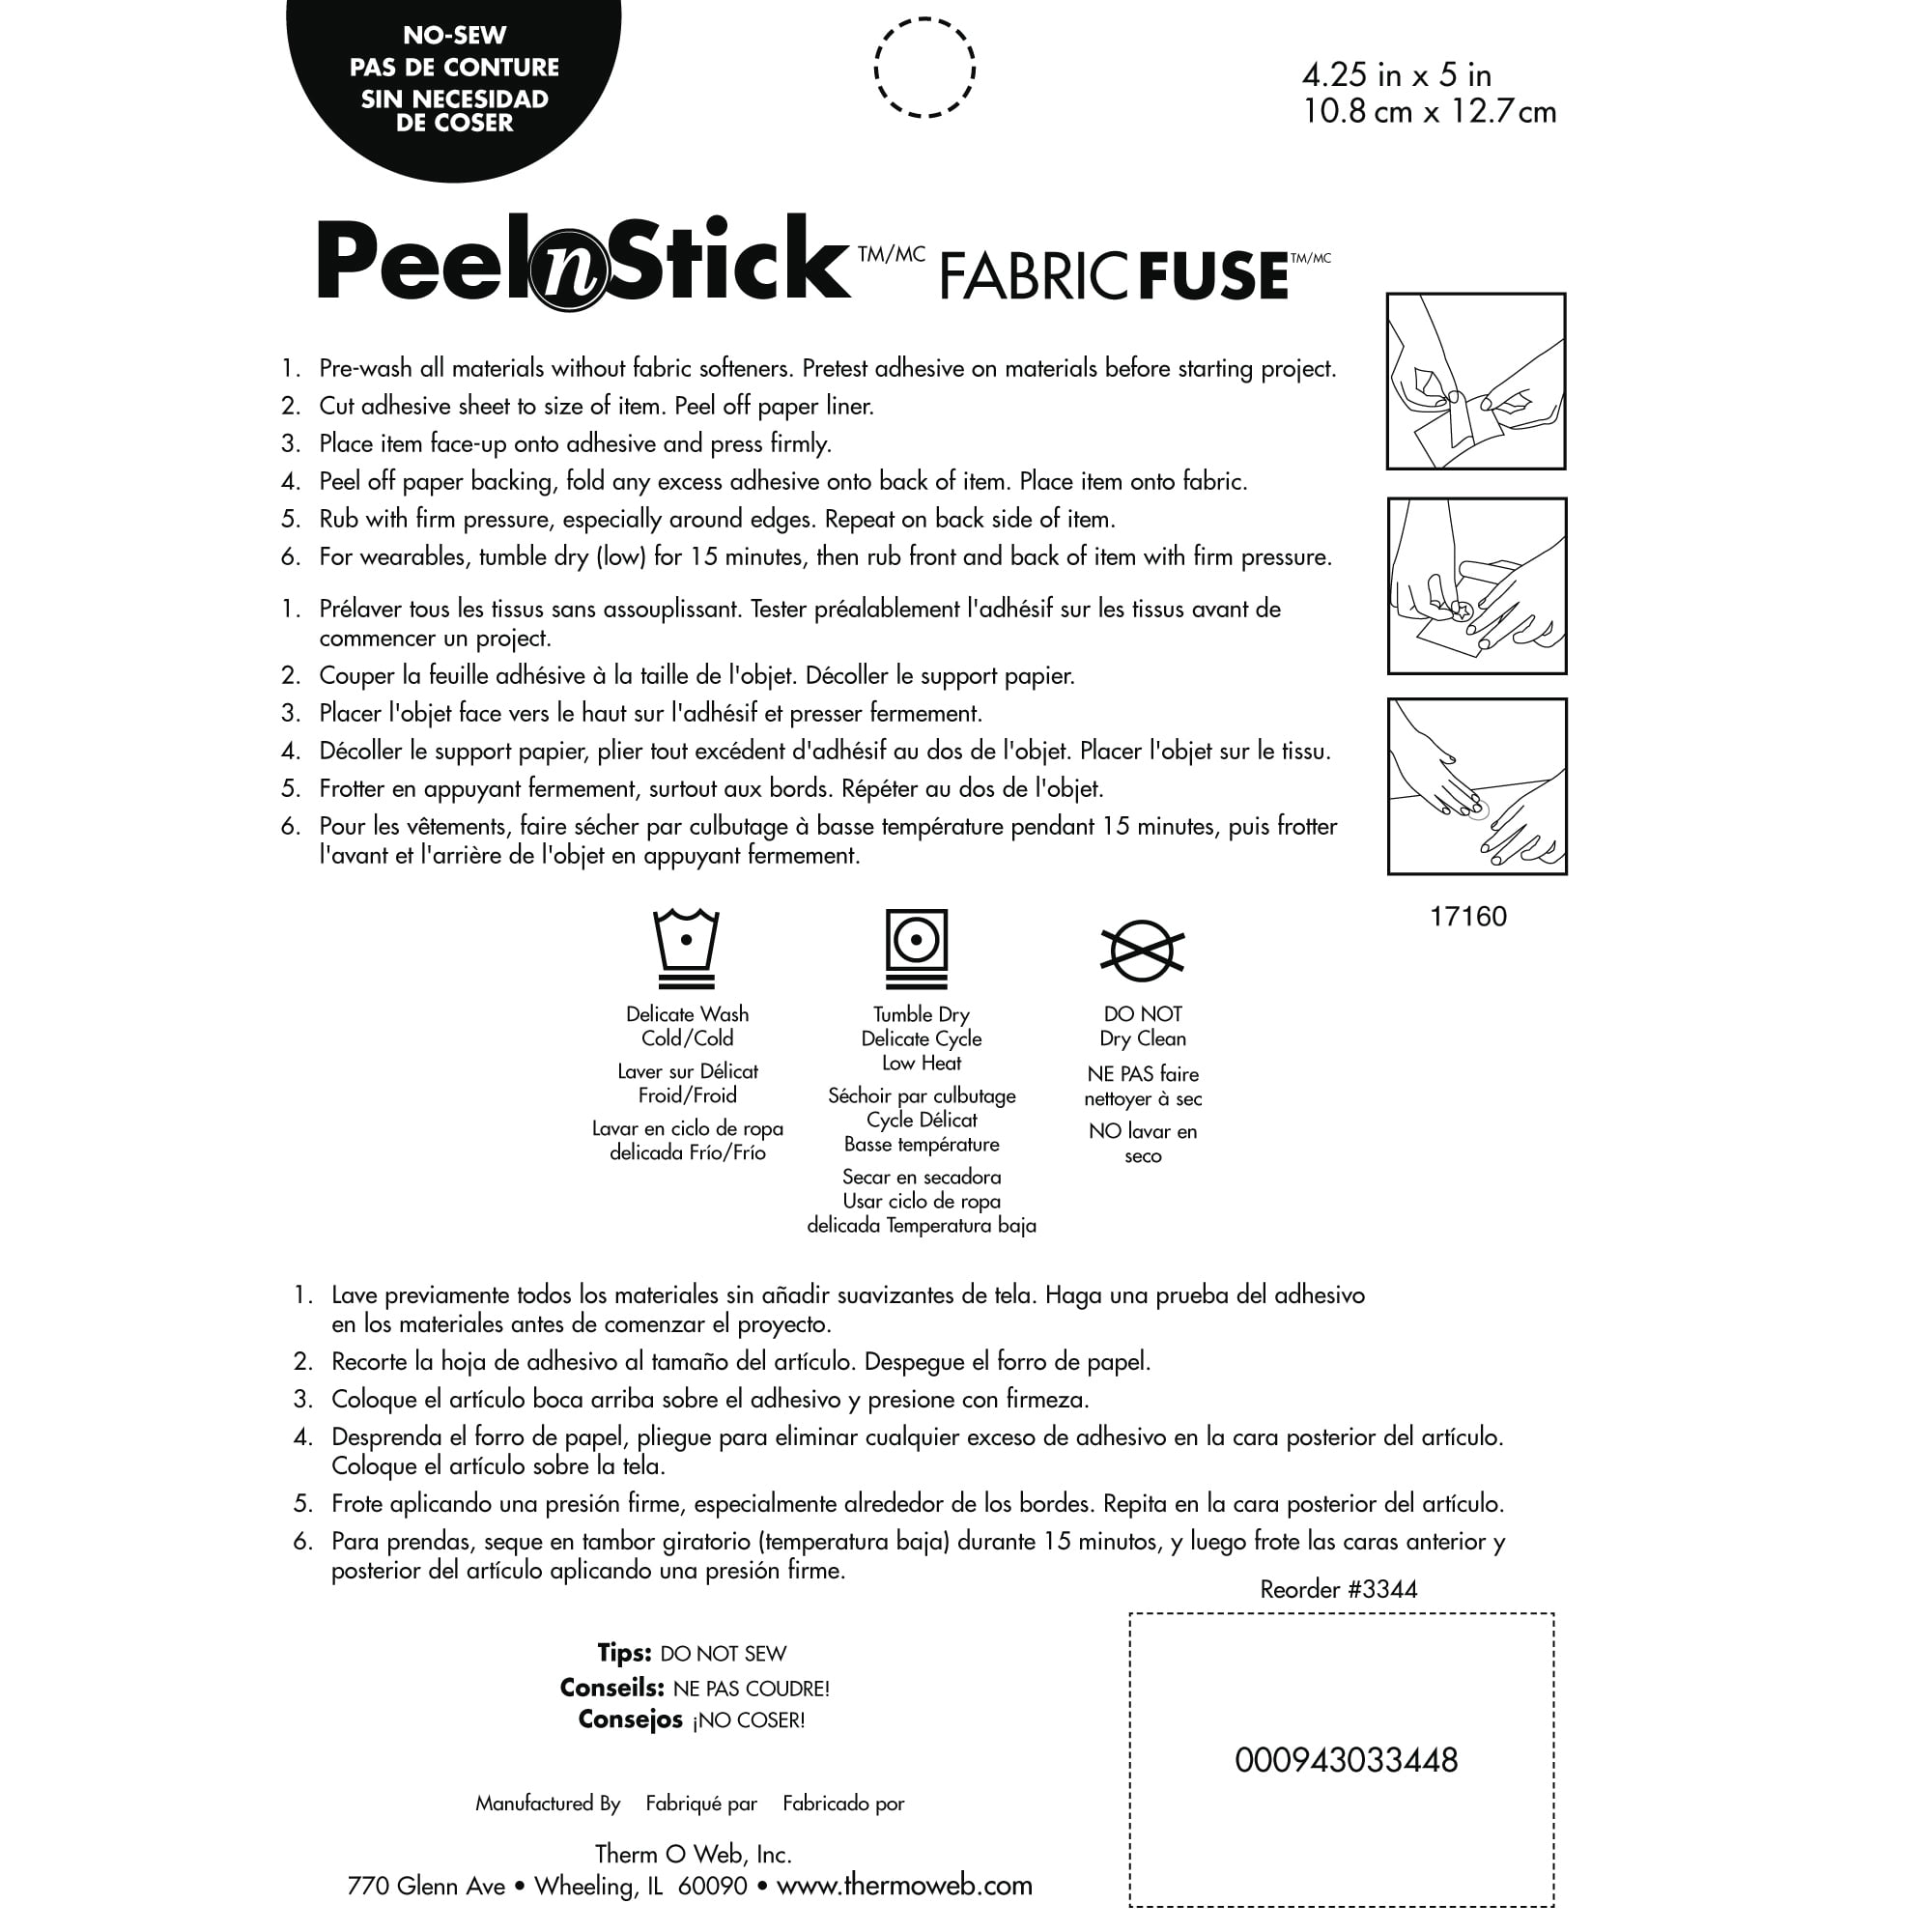 Peel'n Stick Fabric Fuse Sheets 4.25 X 5 Sheets Thermoweb 3344, Fabric Fuse